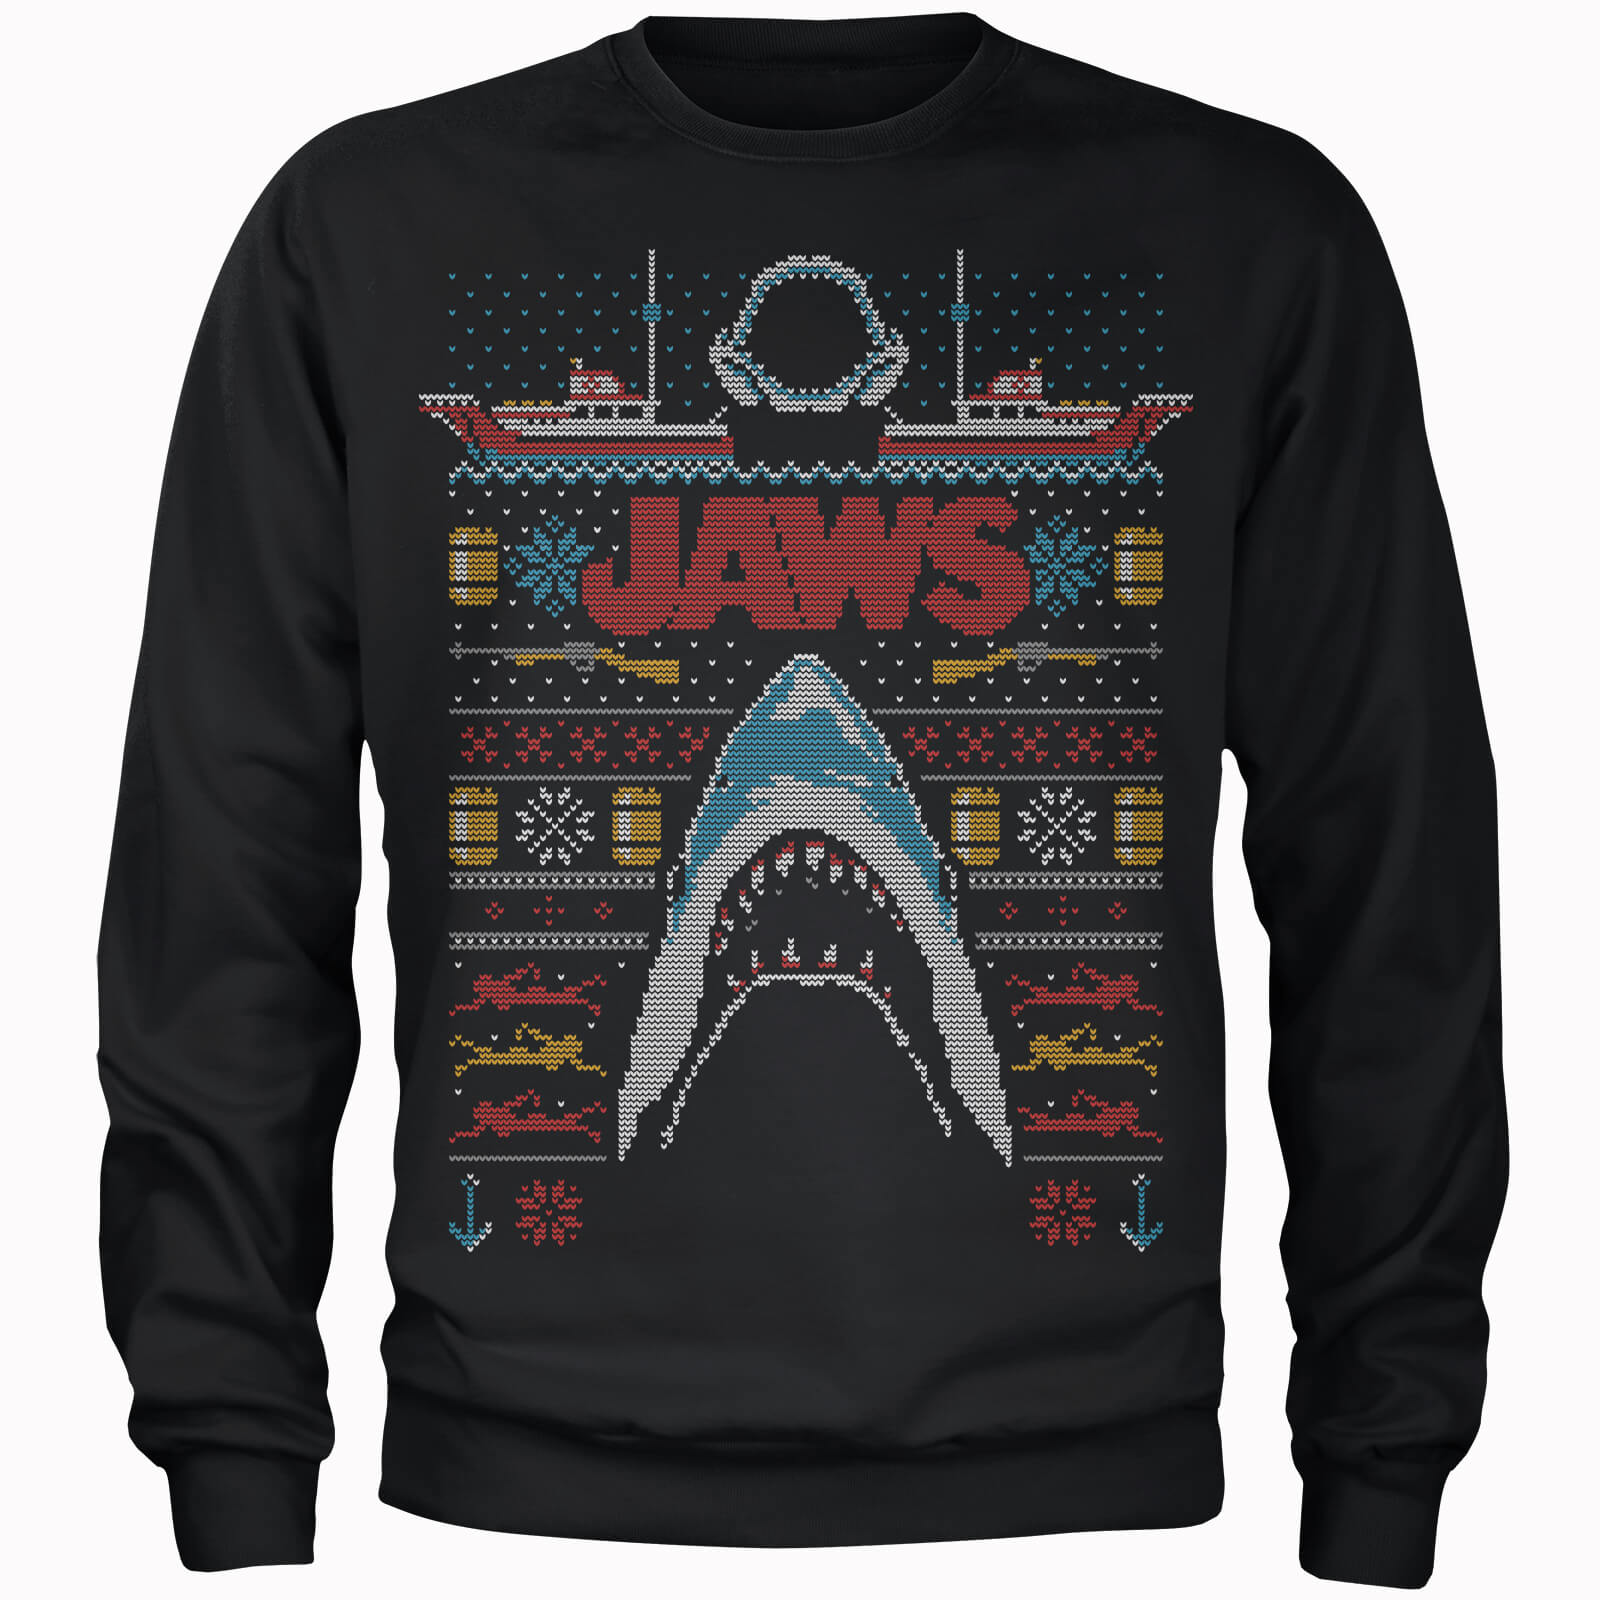 Jaws Fairisle Men's Christmas Sweatshirt - Black - S